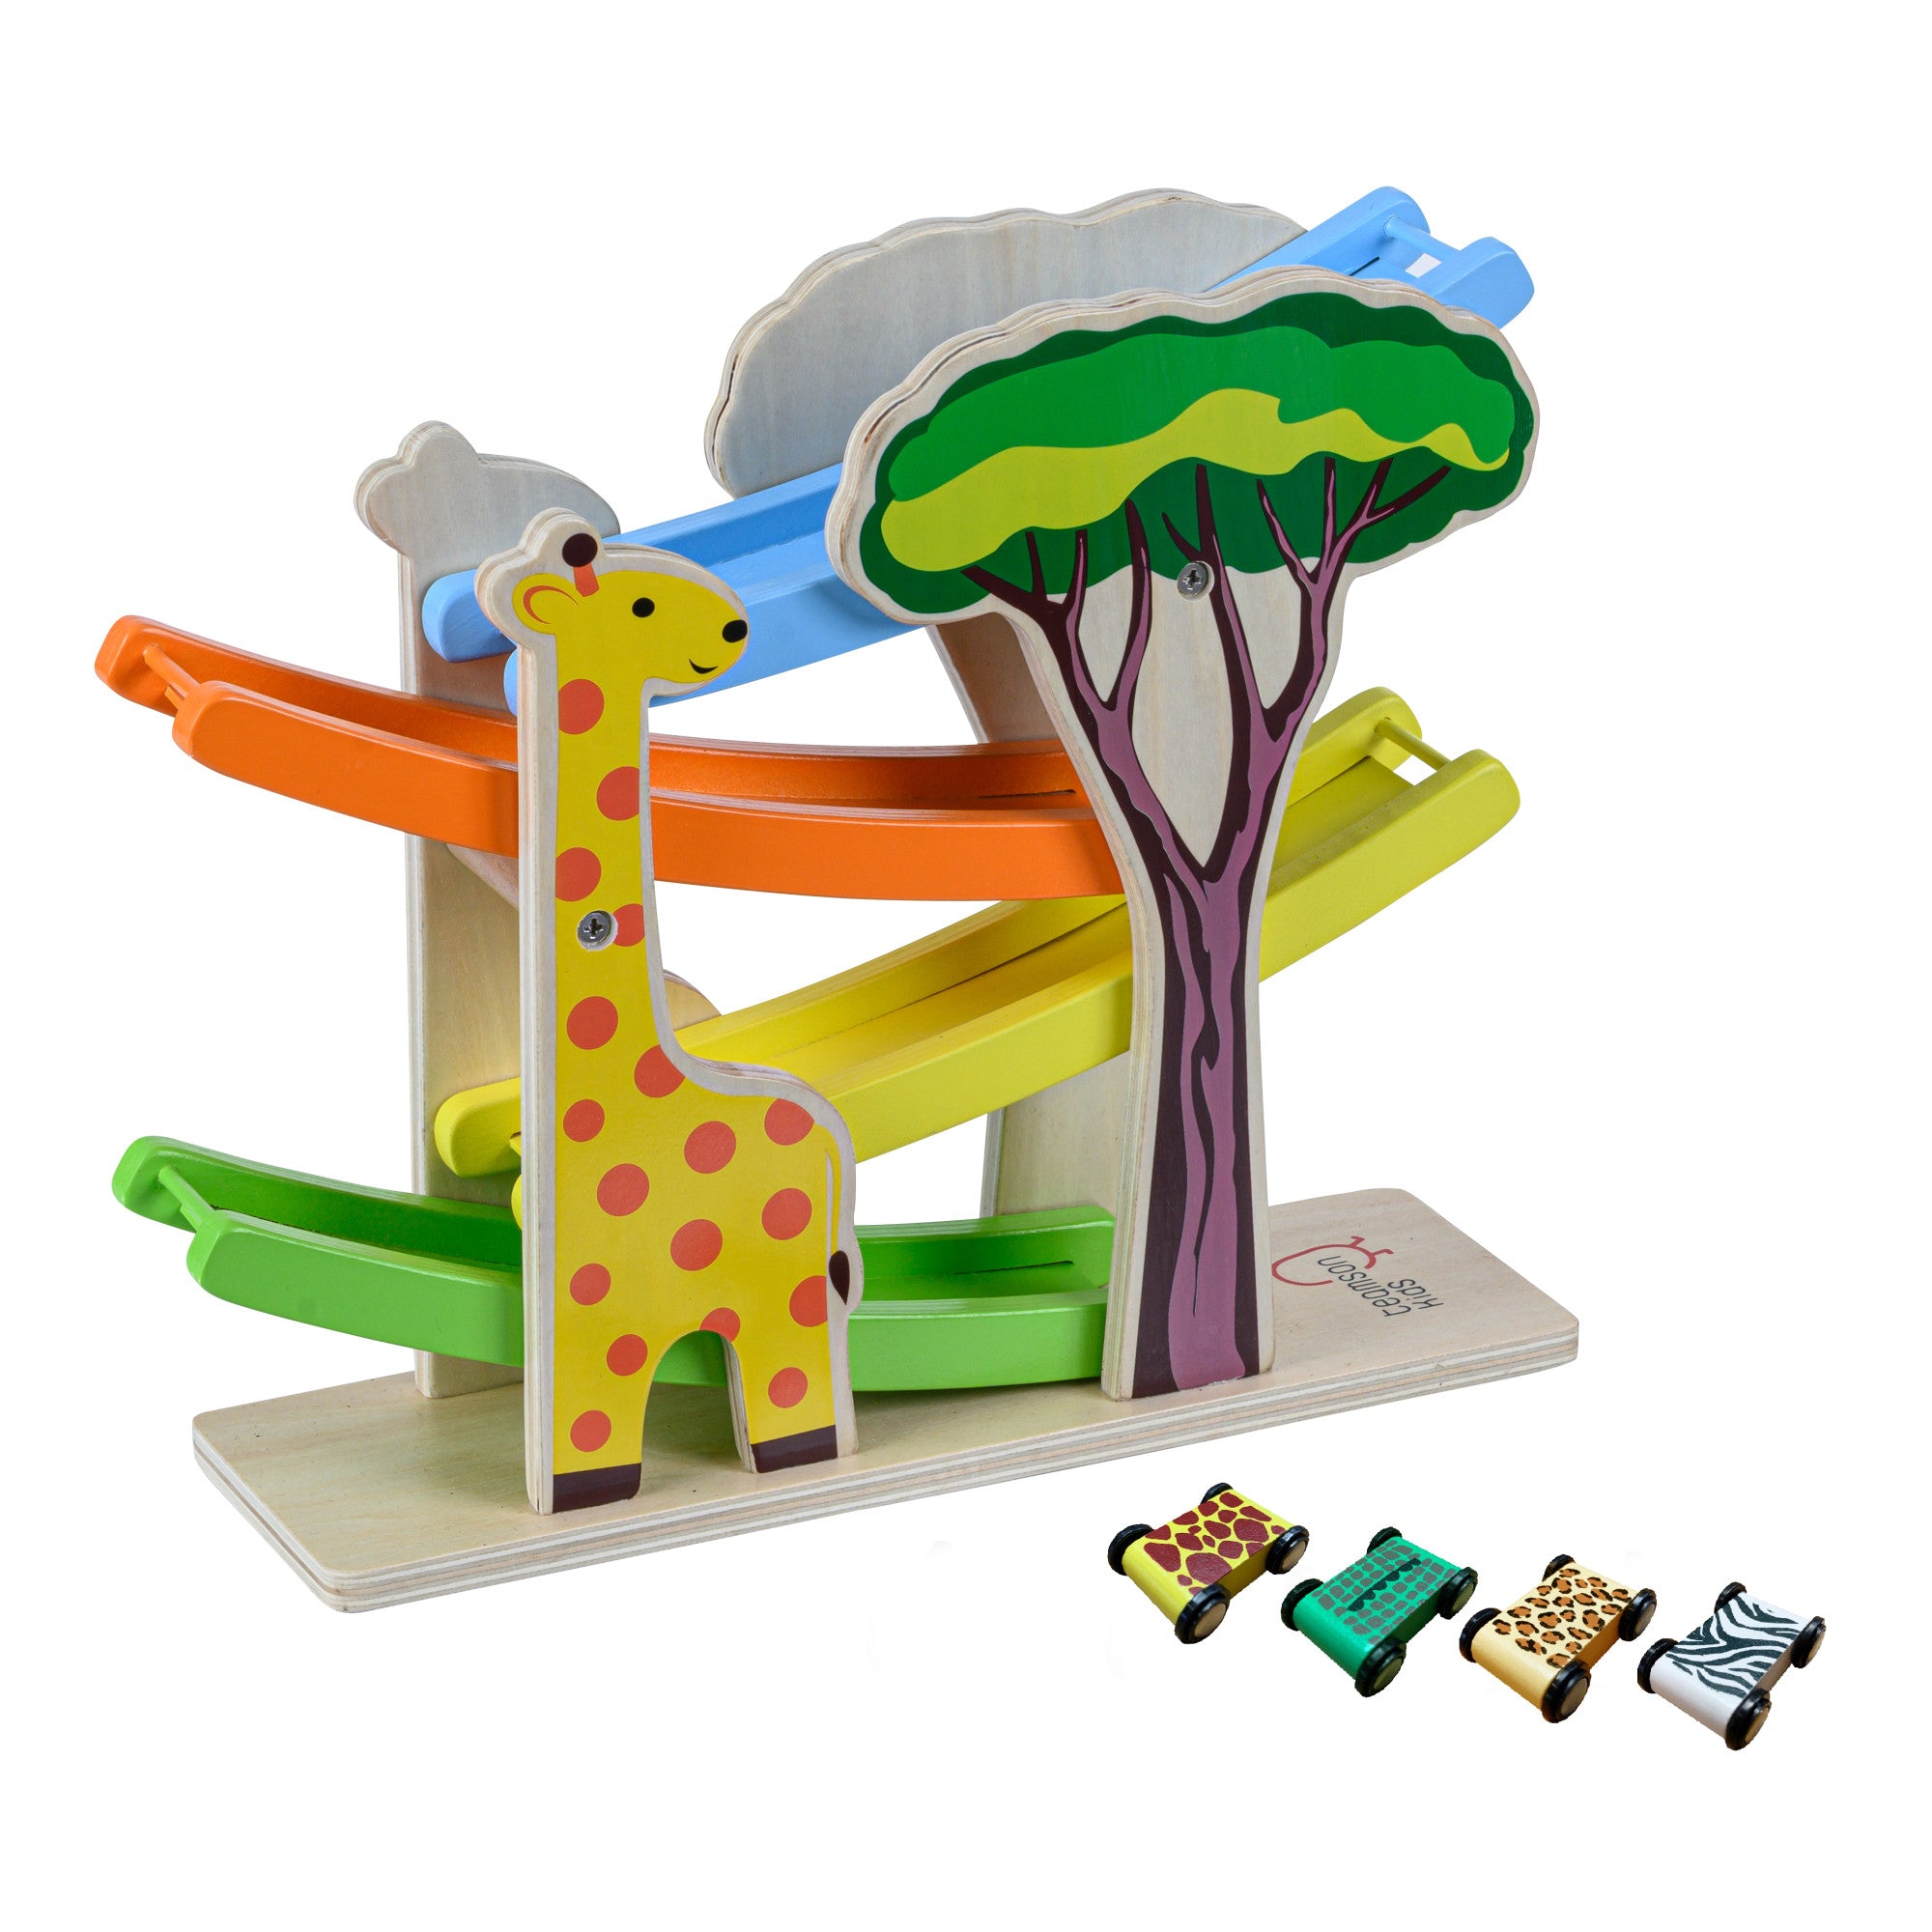 Teamson Kids Preschool Play Lab Wooden Safari Ramp Racer with Animal Print Cars, Multicolor